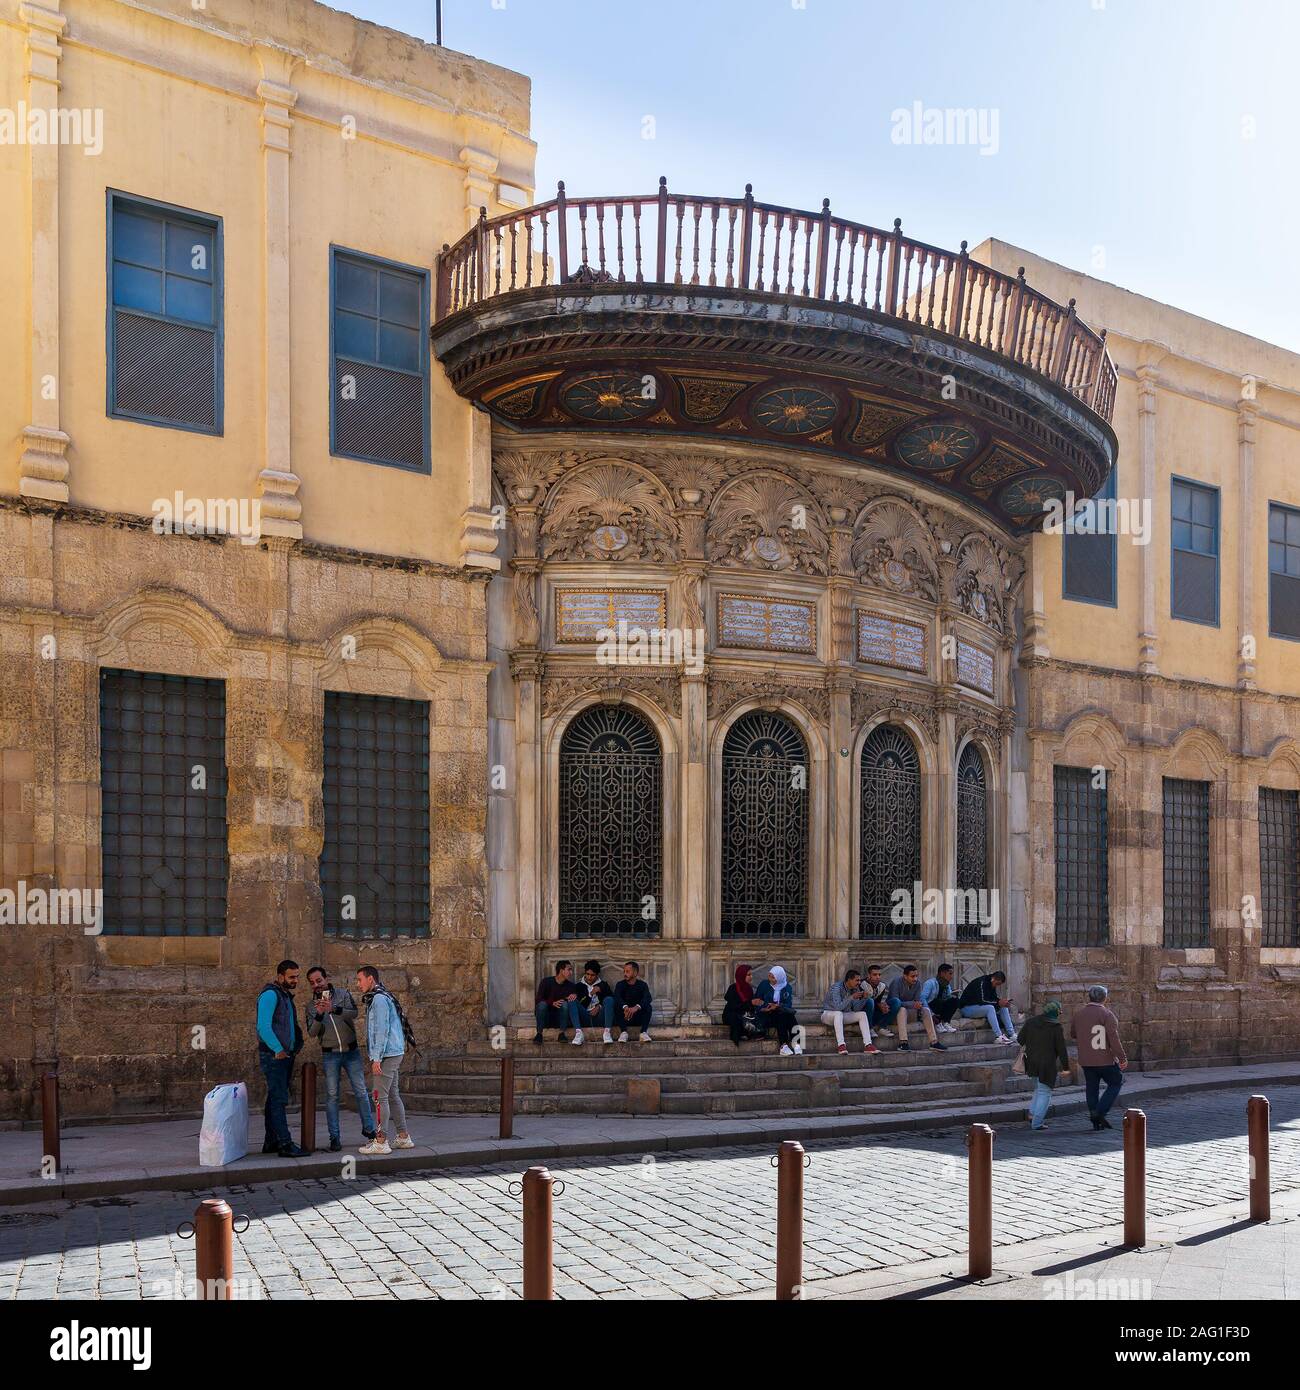 Cairo, Egypt- December 14 2019: Facade of Ottoman era historic Mohamed Ali Sabil building, Moez Street, Nahassen district, Medieval Cairo, Egypt Stock Photo